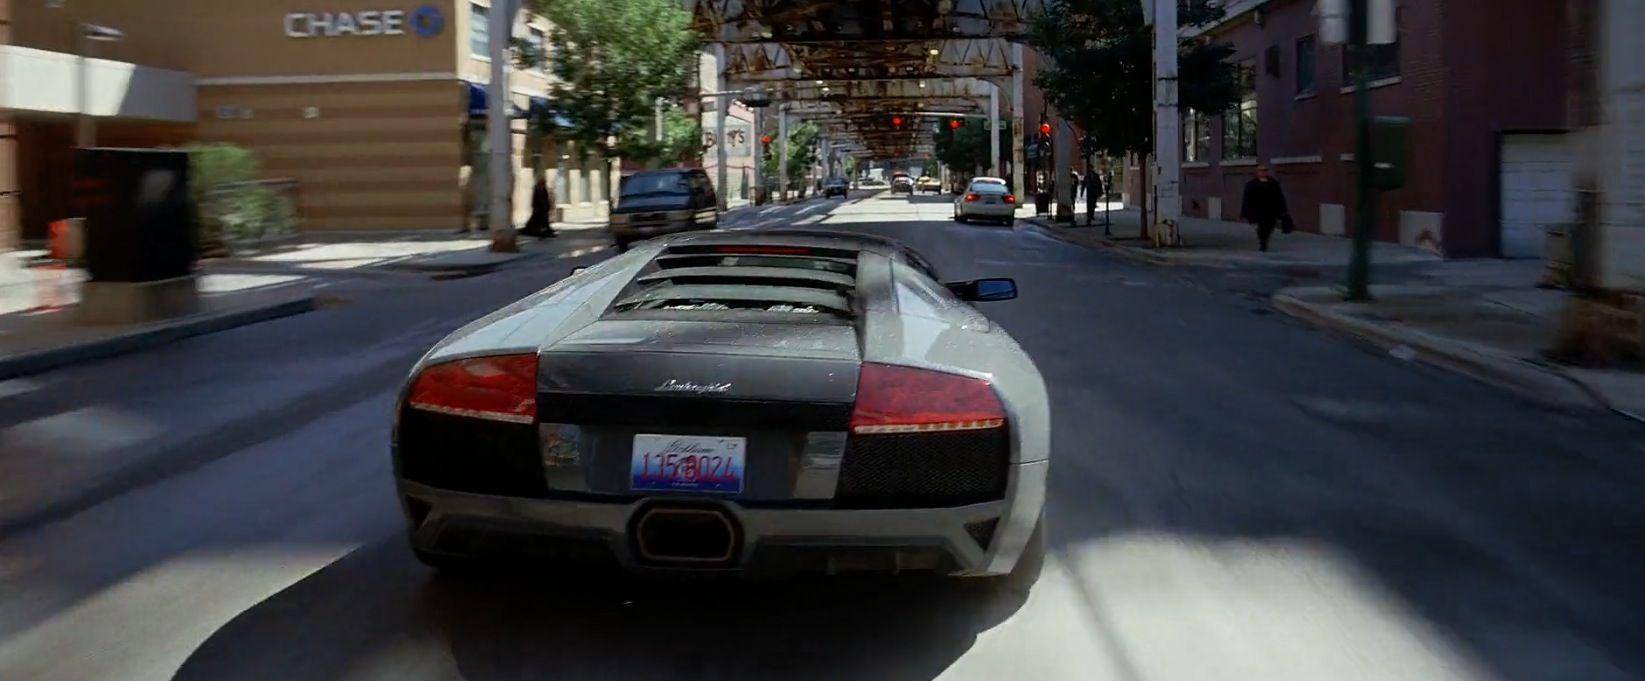 Lamborghini murcielago lp640 driving down city street